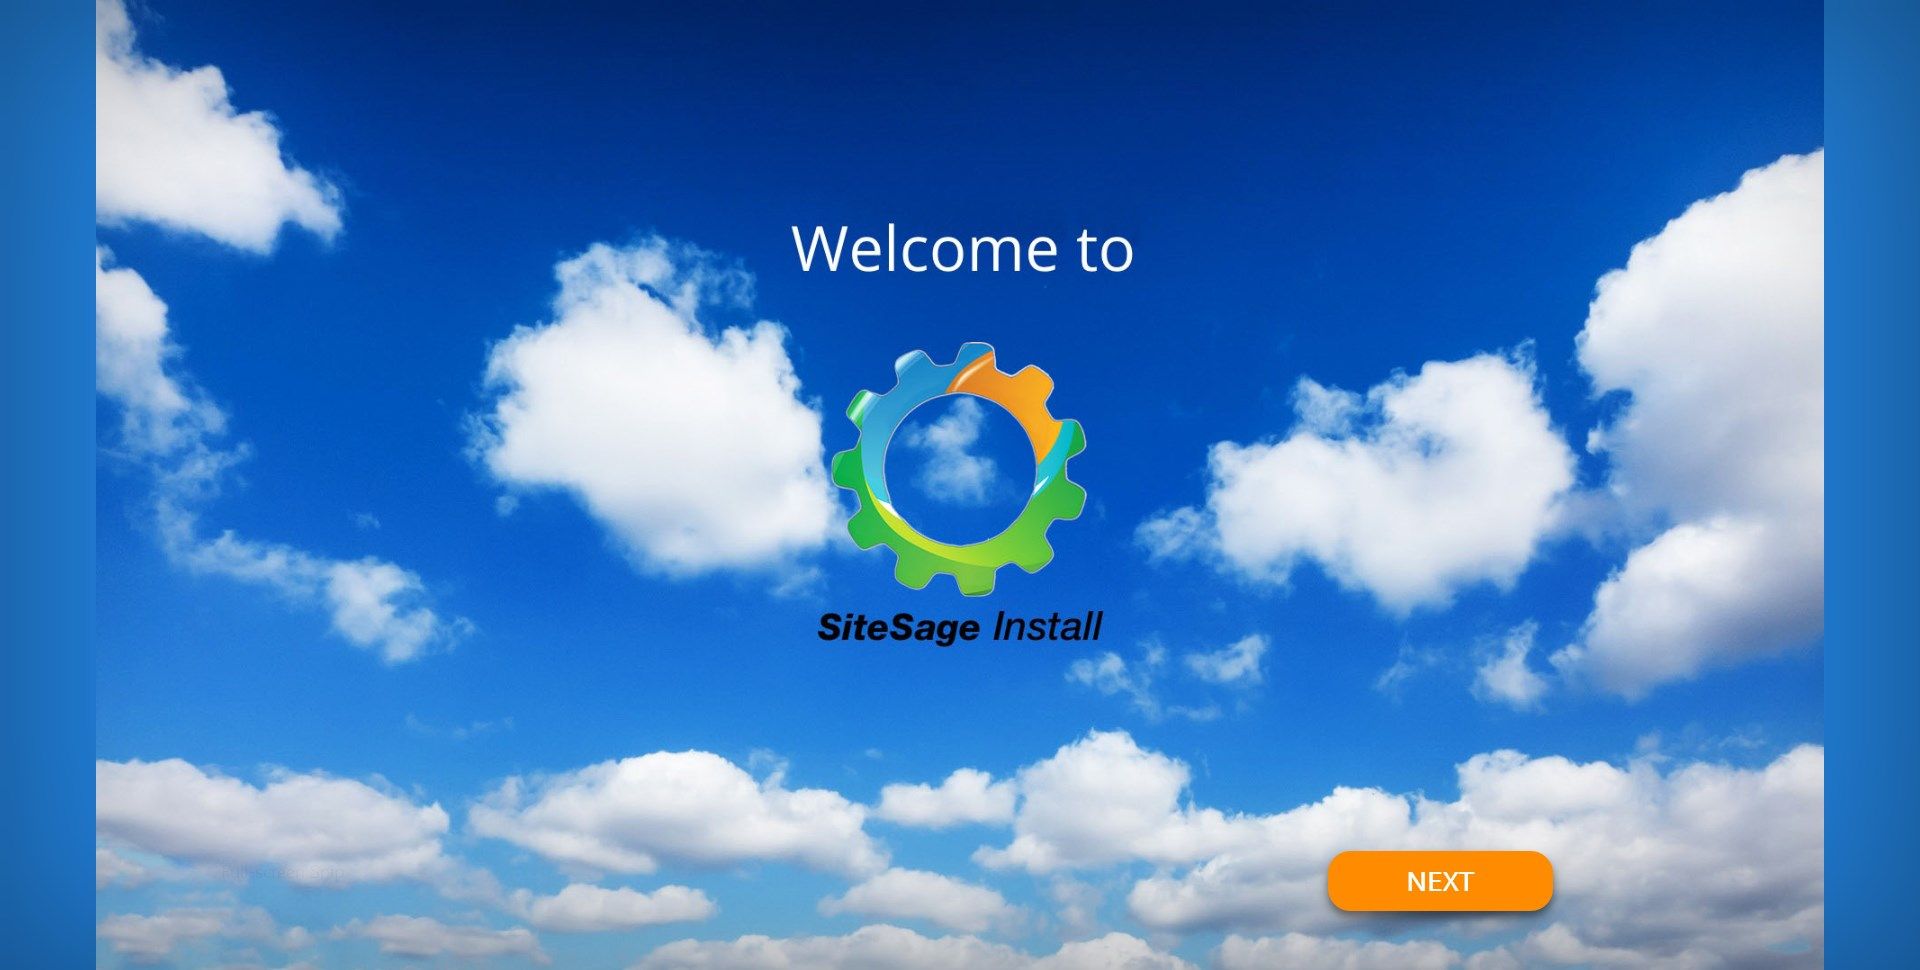 SiteSage Install